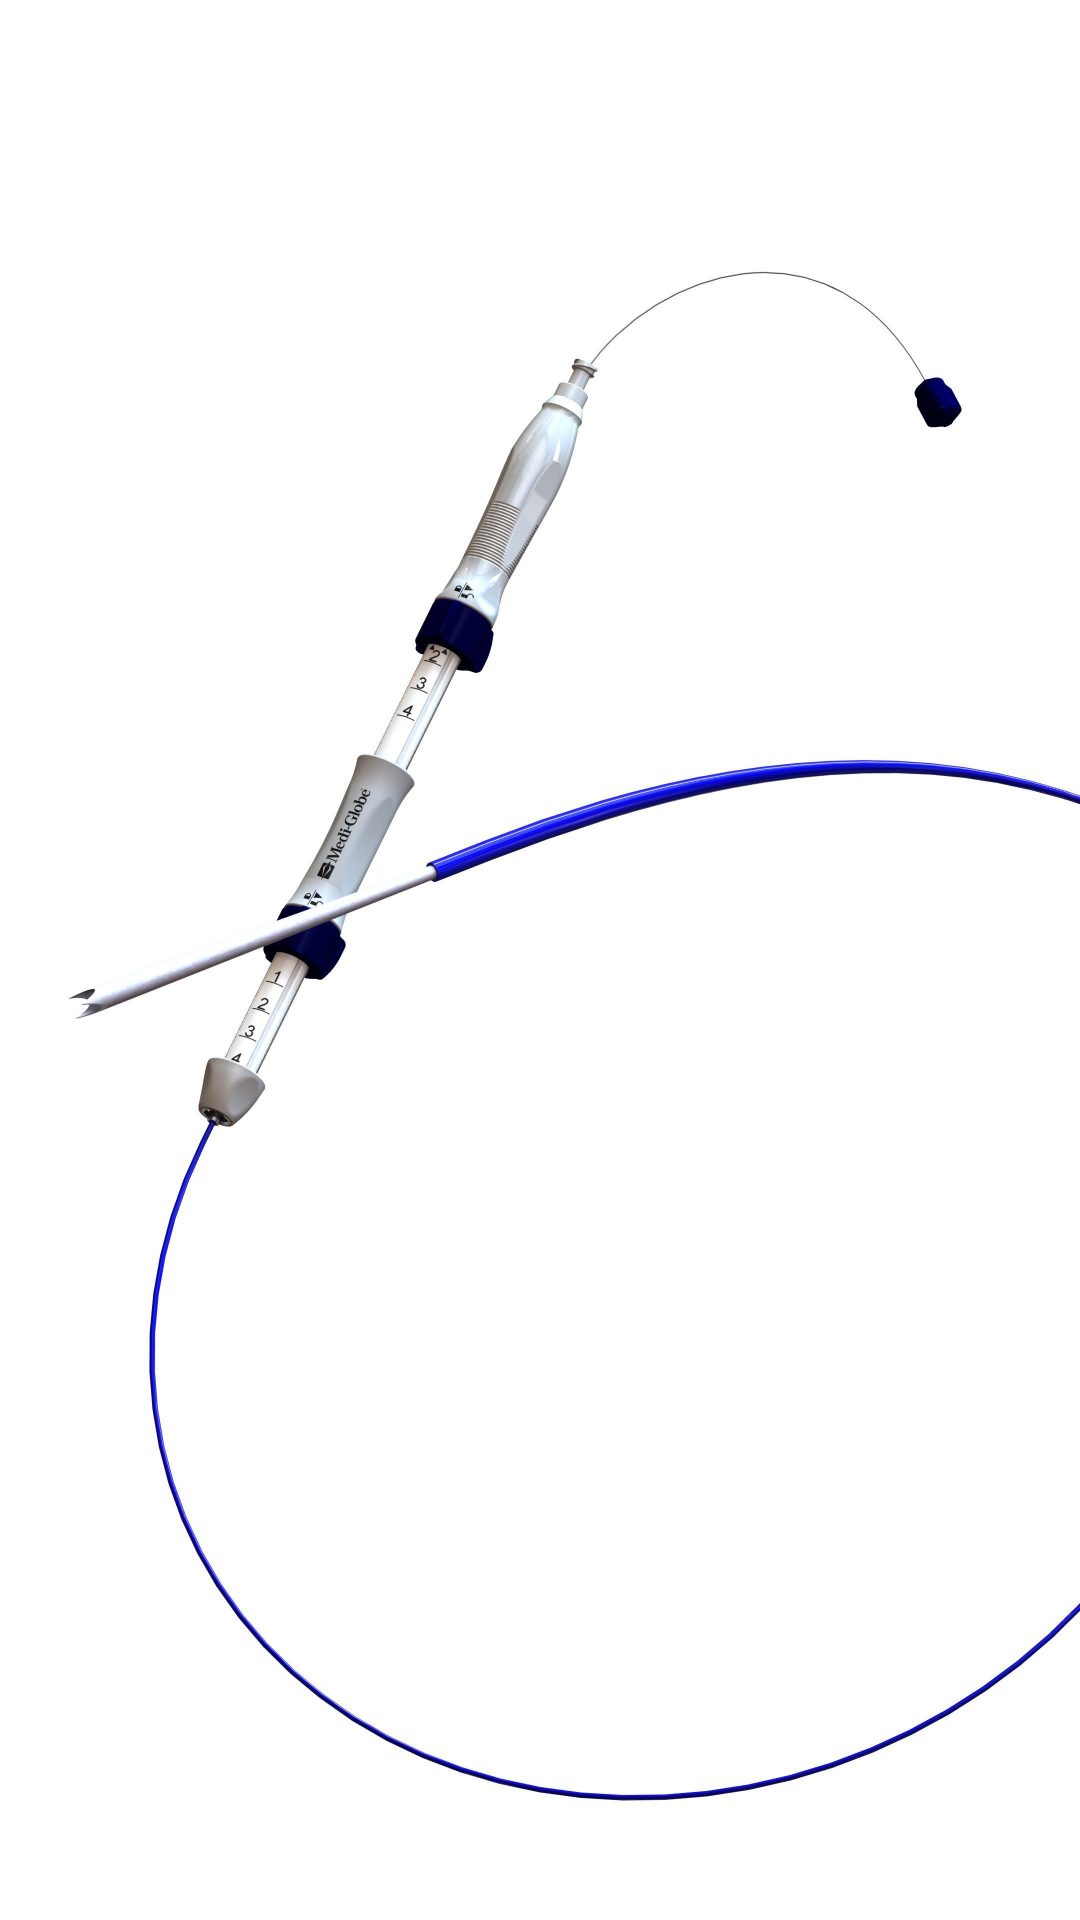 EBUS Transbronchial Needle Biopsy (TBNB) image